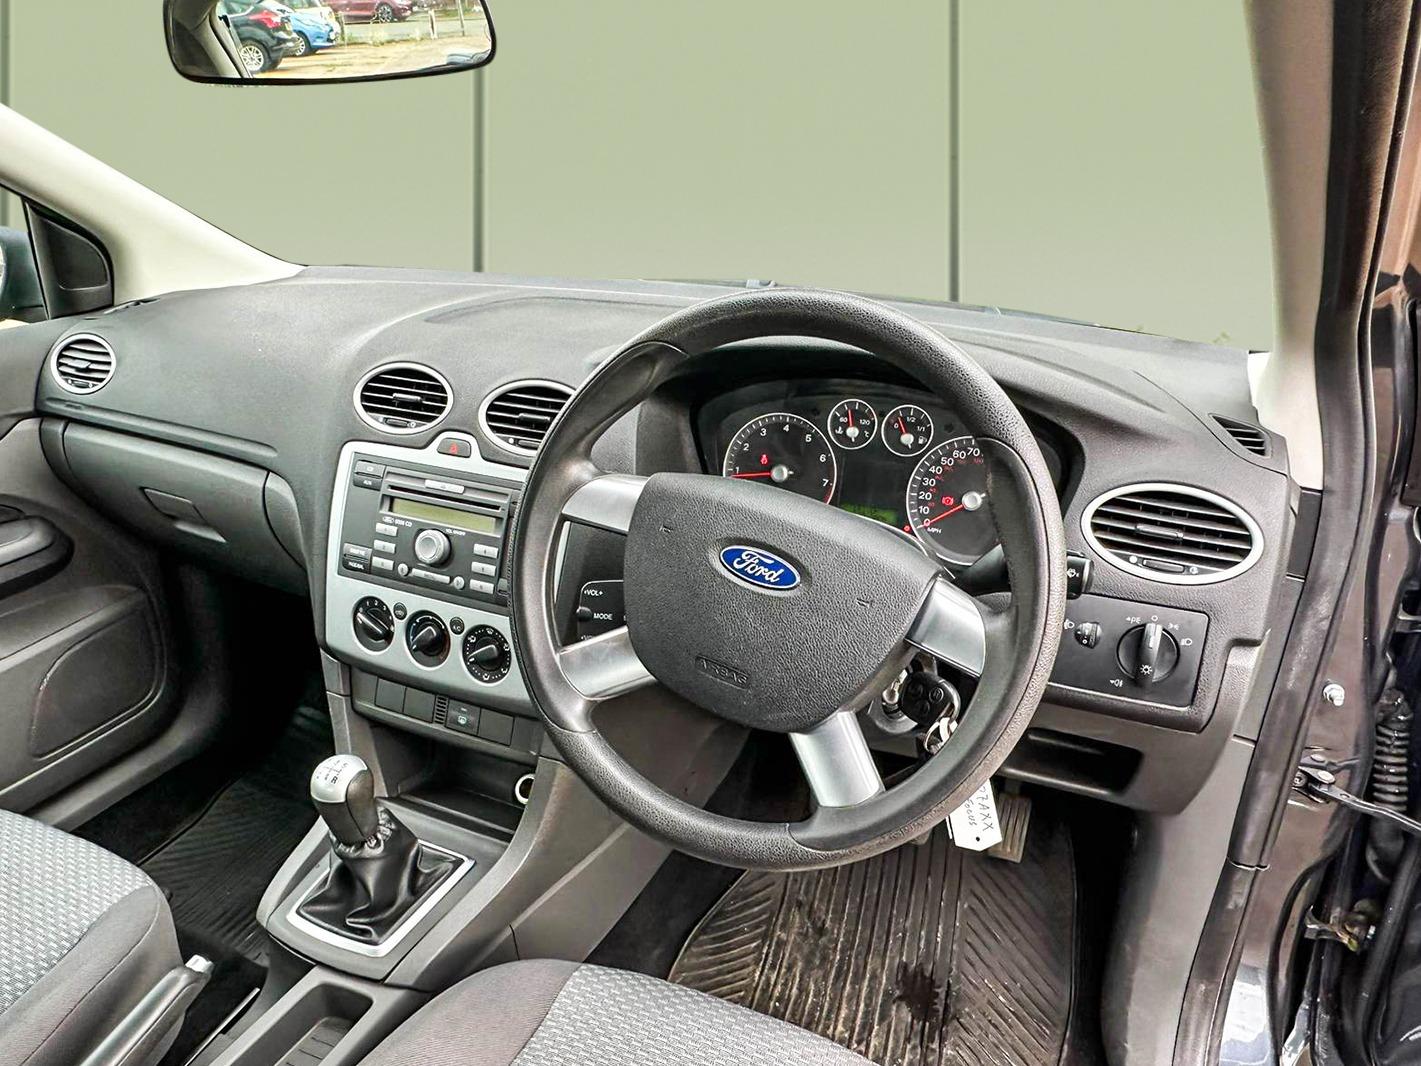 Ford Focus 1.4 LX Hatchback 5dr Petrol Manual (159 g/km, 79 bhp)